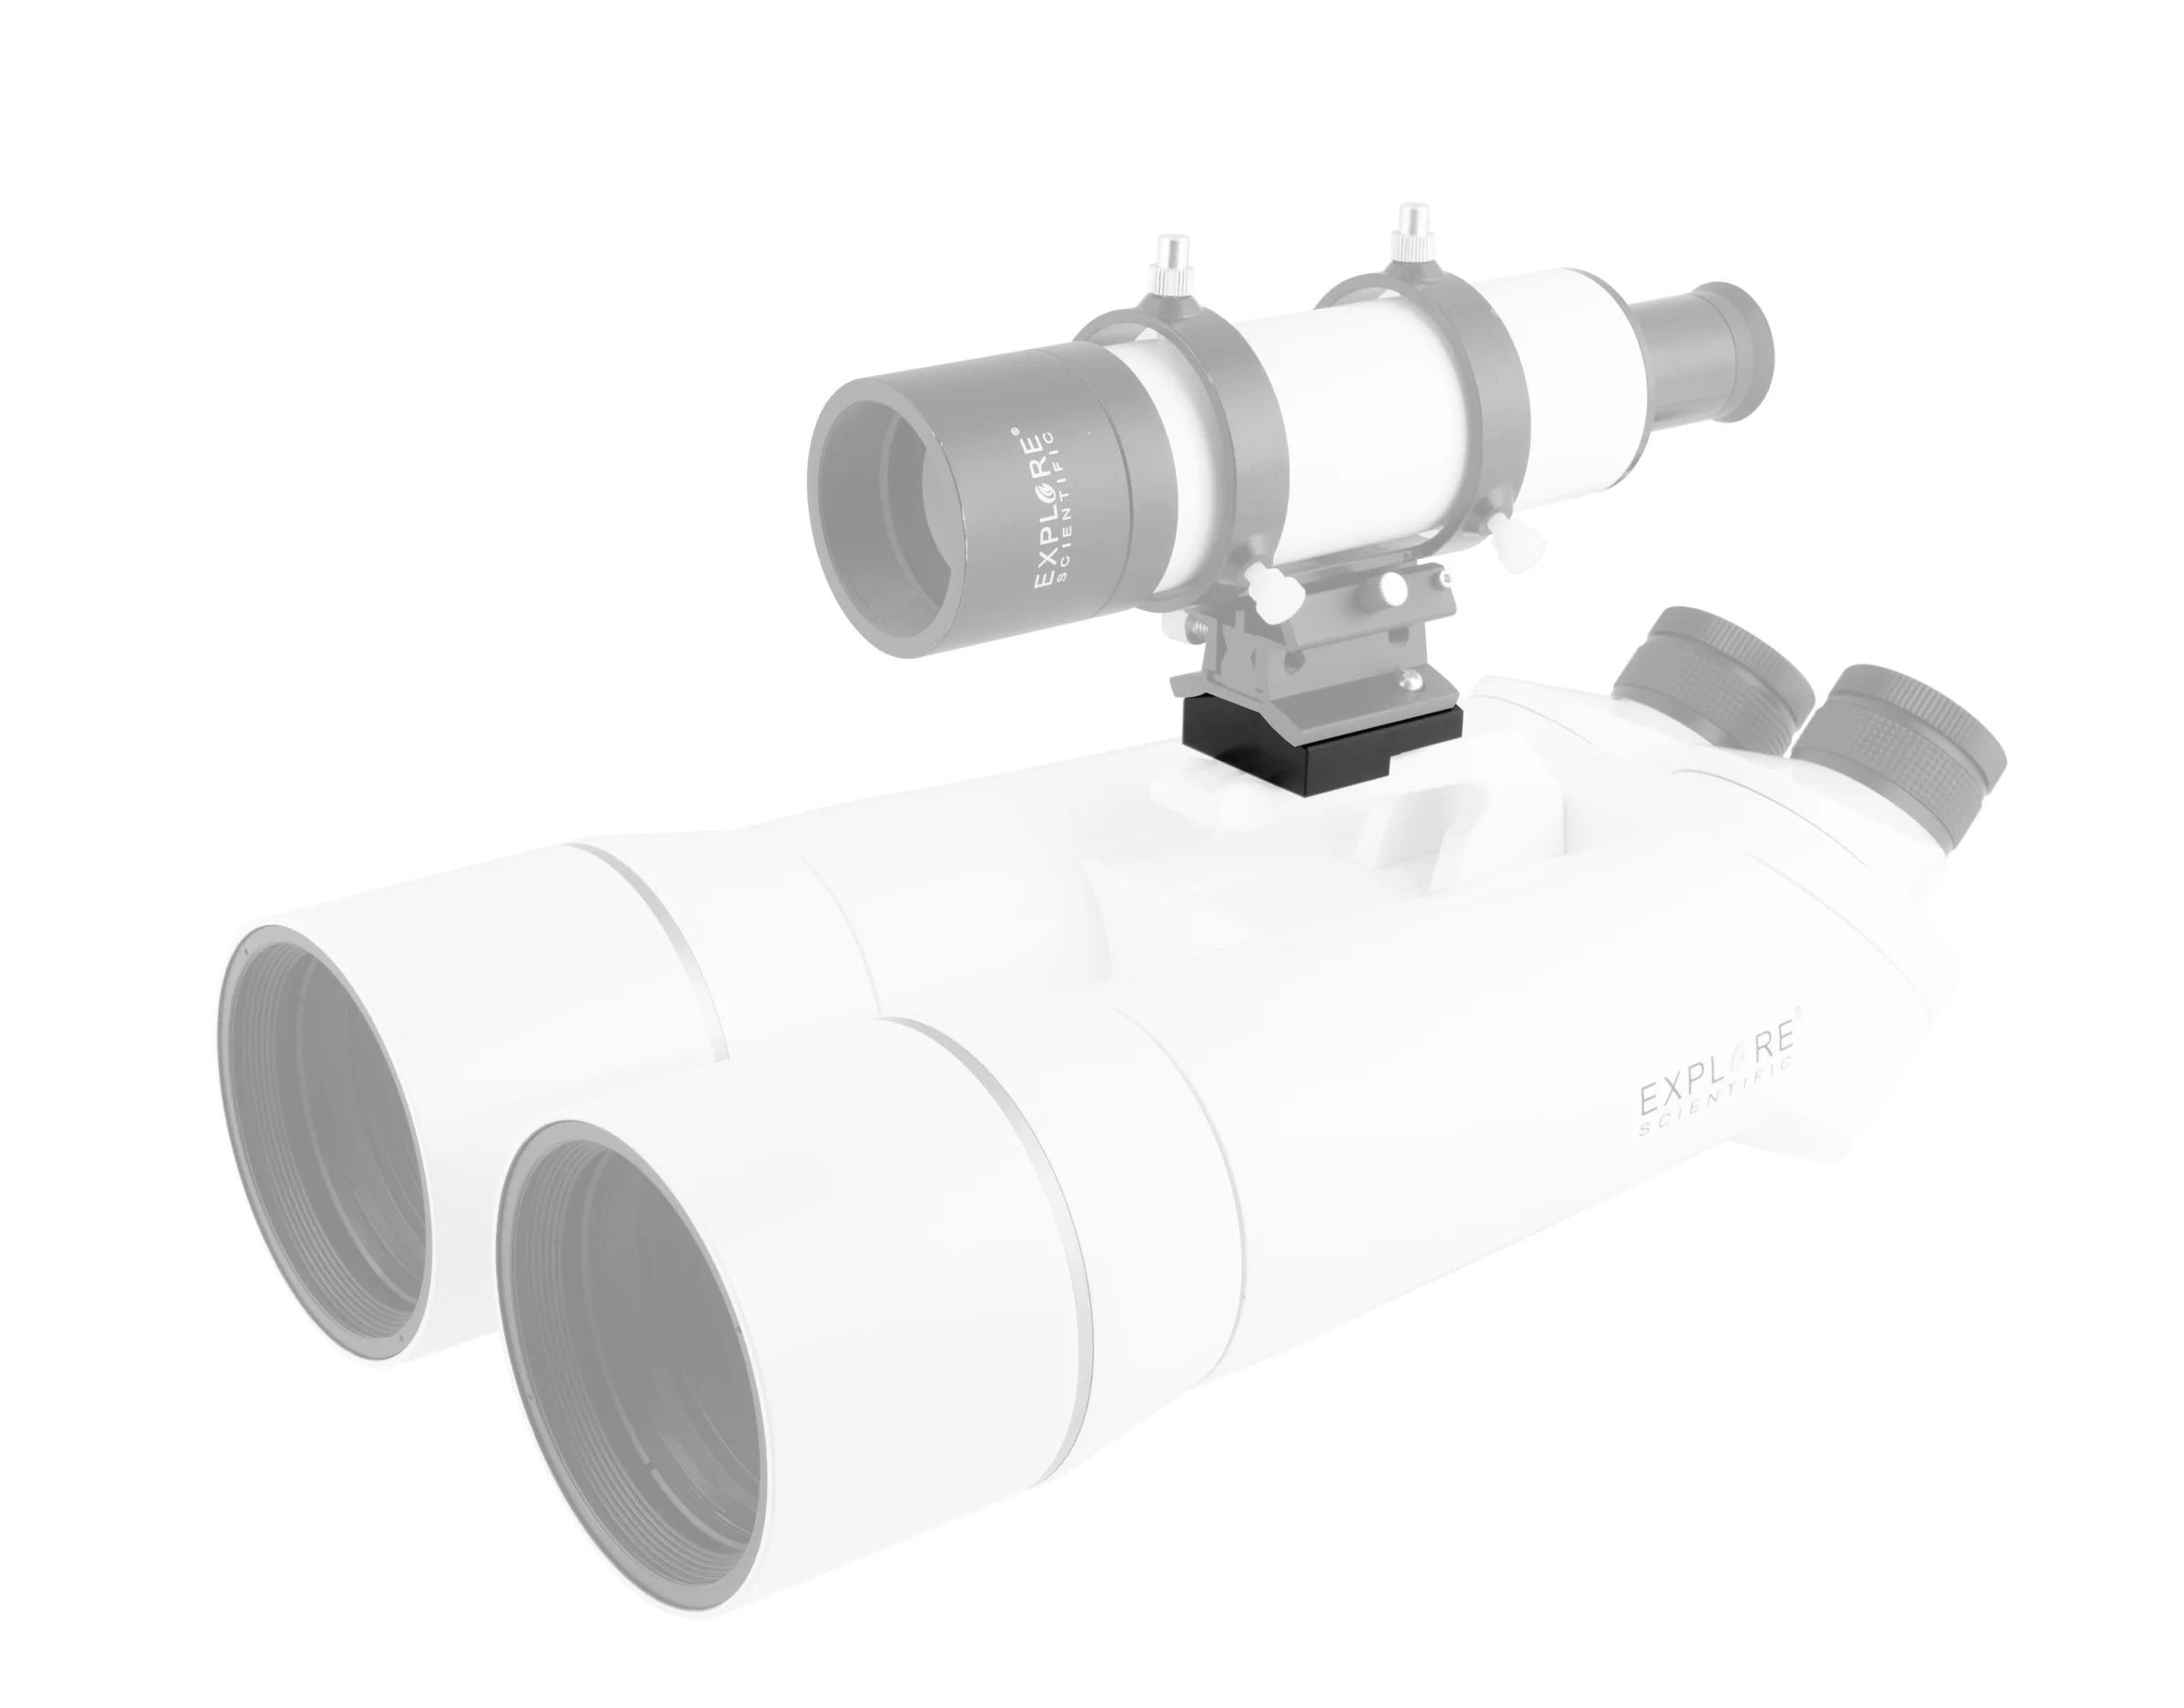 EXPLORE SCIENTIFIC Adapter Hybrid Finder Base for Giant Binoculars